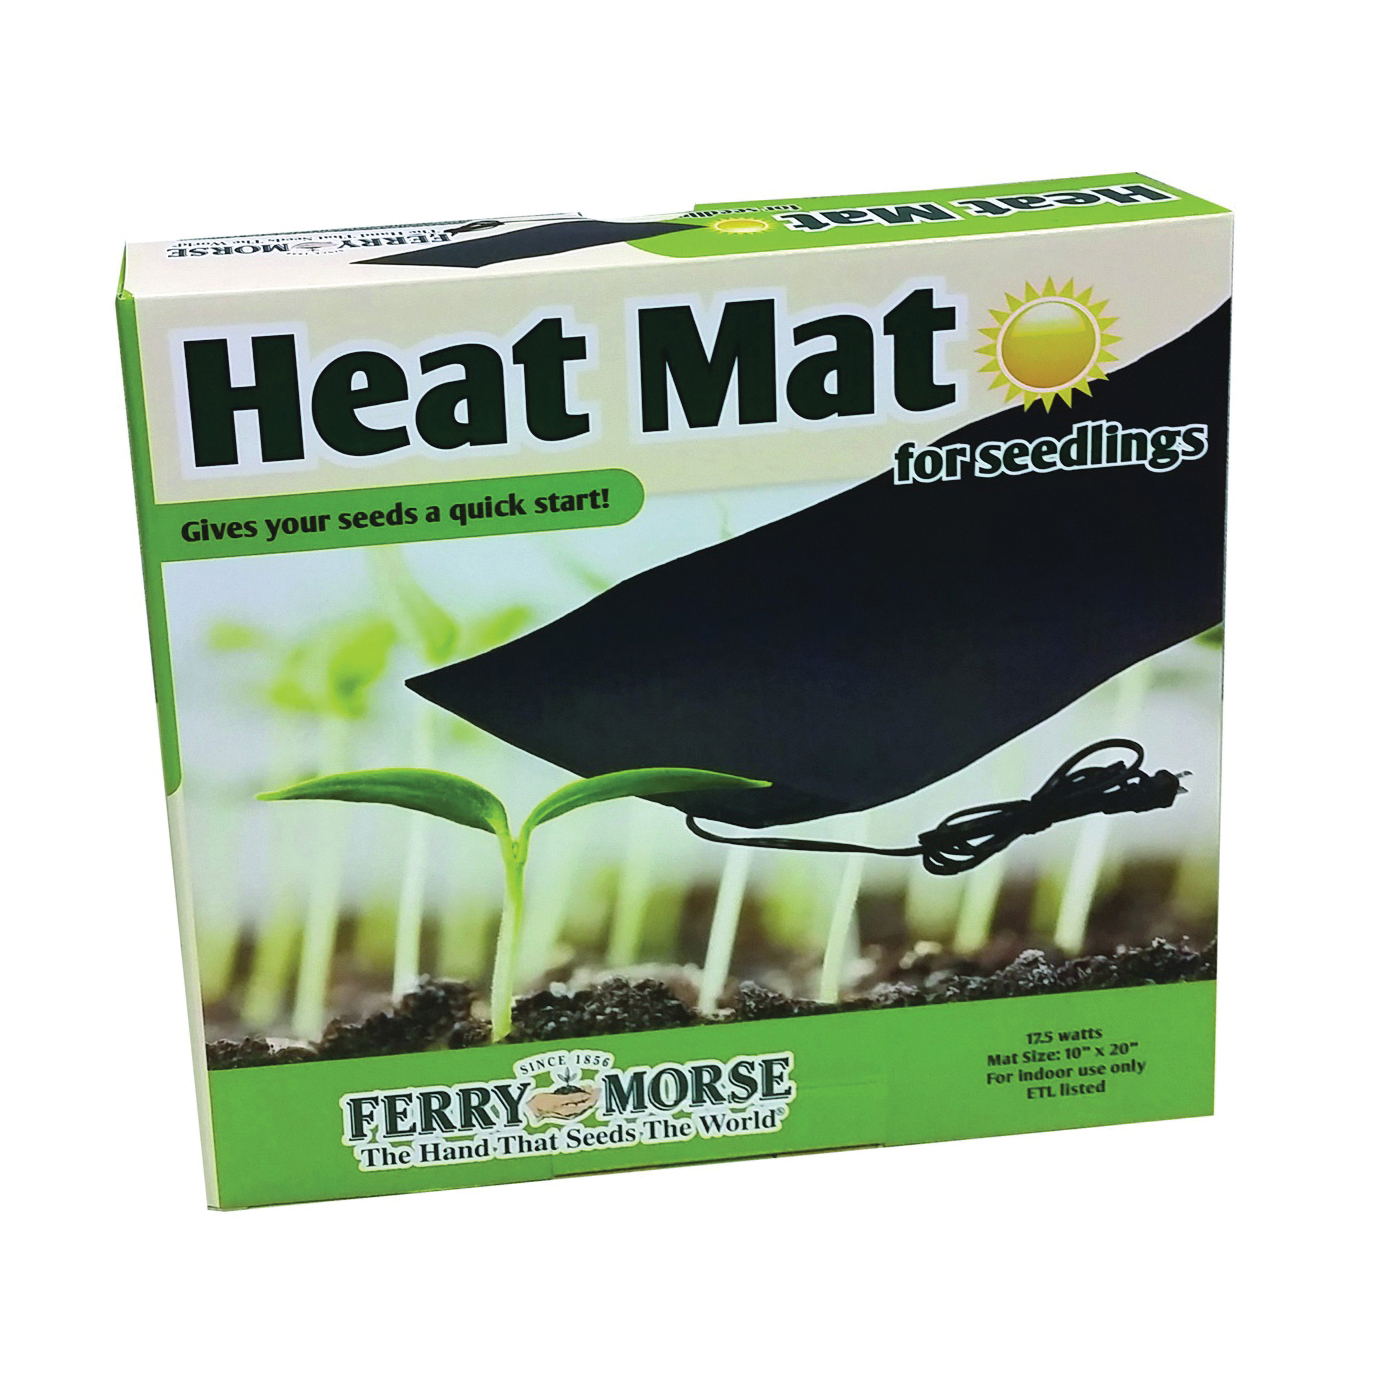 Ferry-Morse KHEATMAT Heat Mat, Black - 1